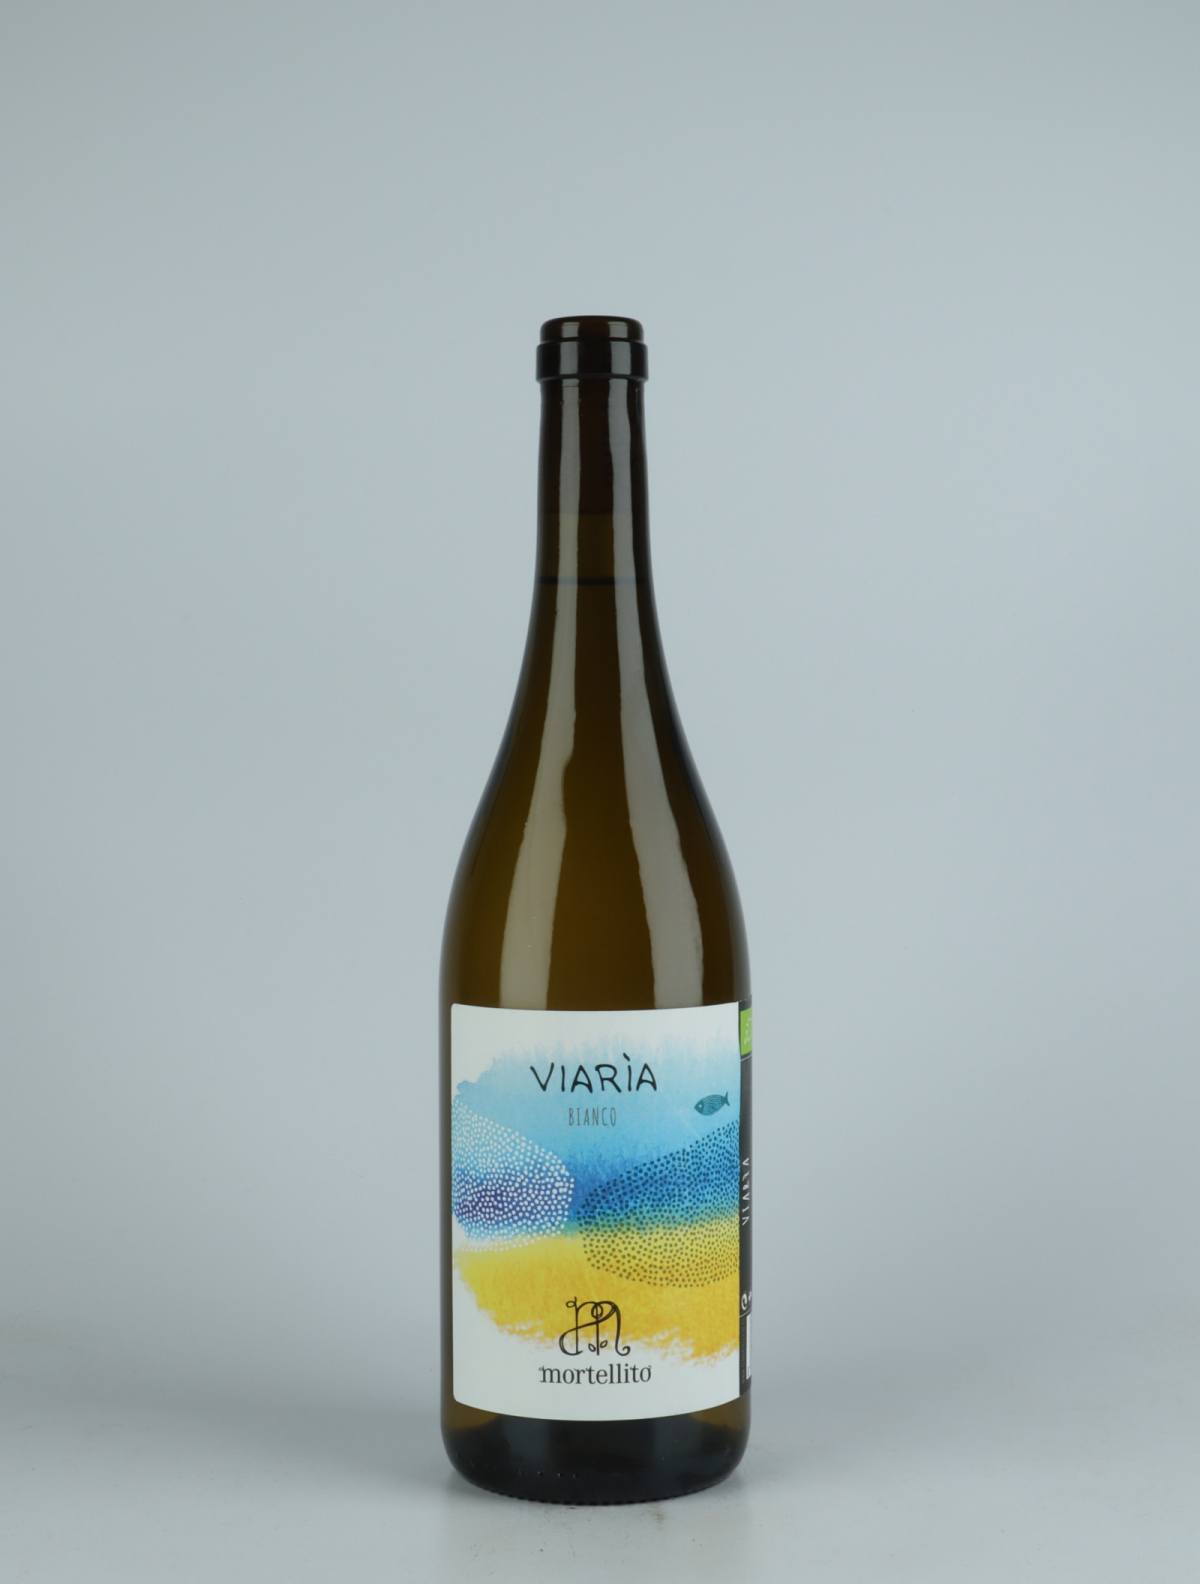 En flaske 2021 Viaria Orange vin fra Il Mortellito, Sicilien i Italien